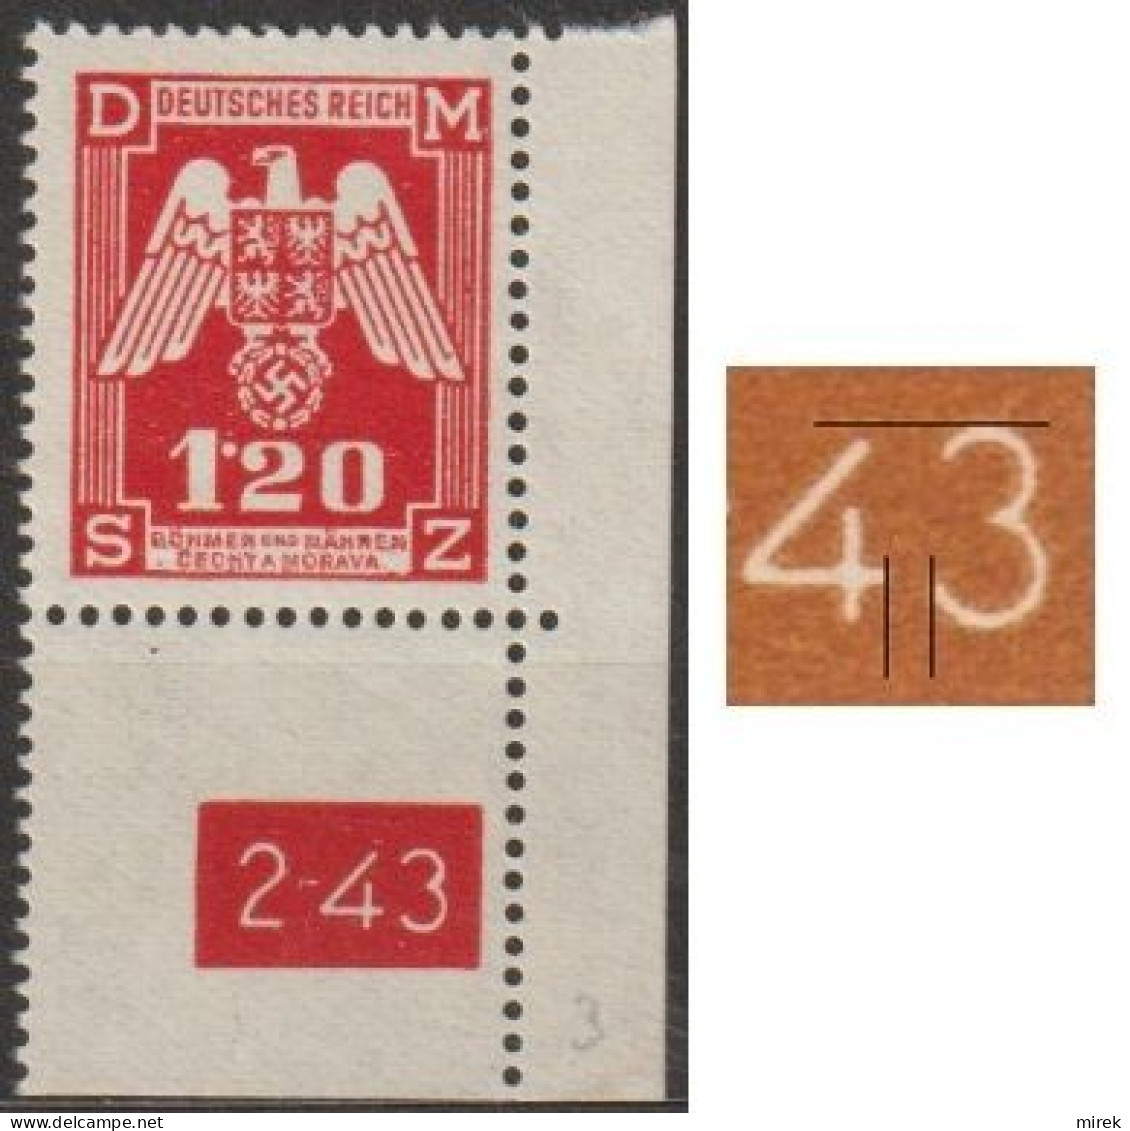 026a/ Pof. SL 19, Corner Stamp, Plate Number 2-43, Type 2, Var. 3 - Neufs